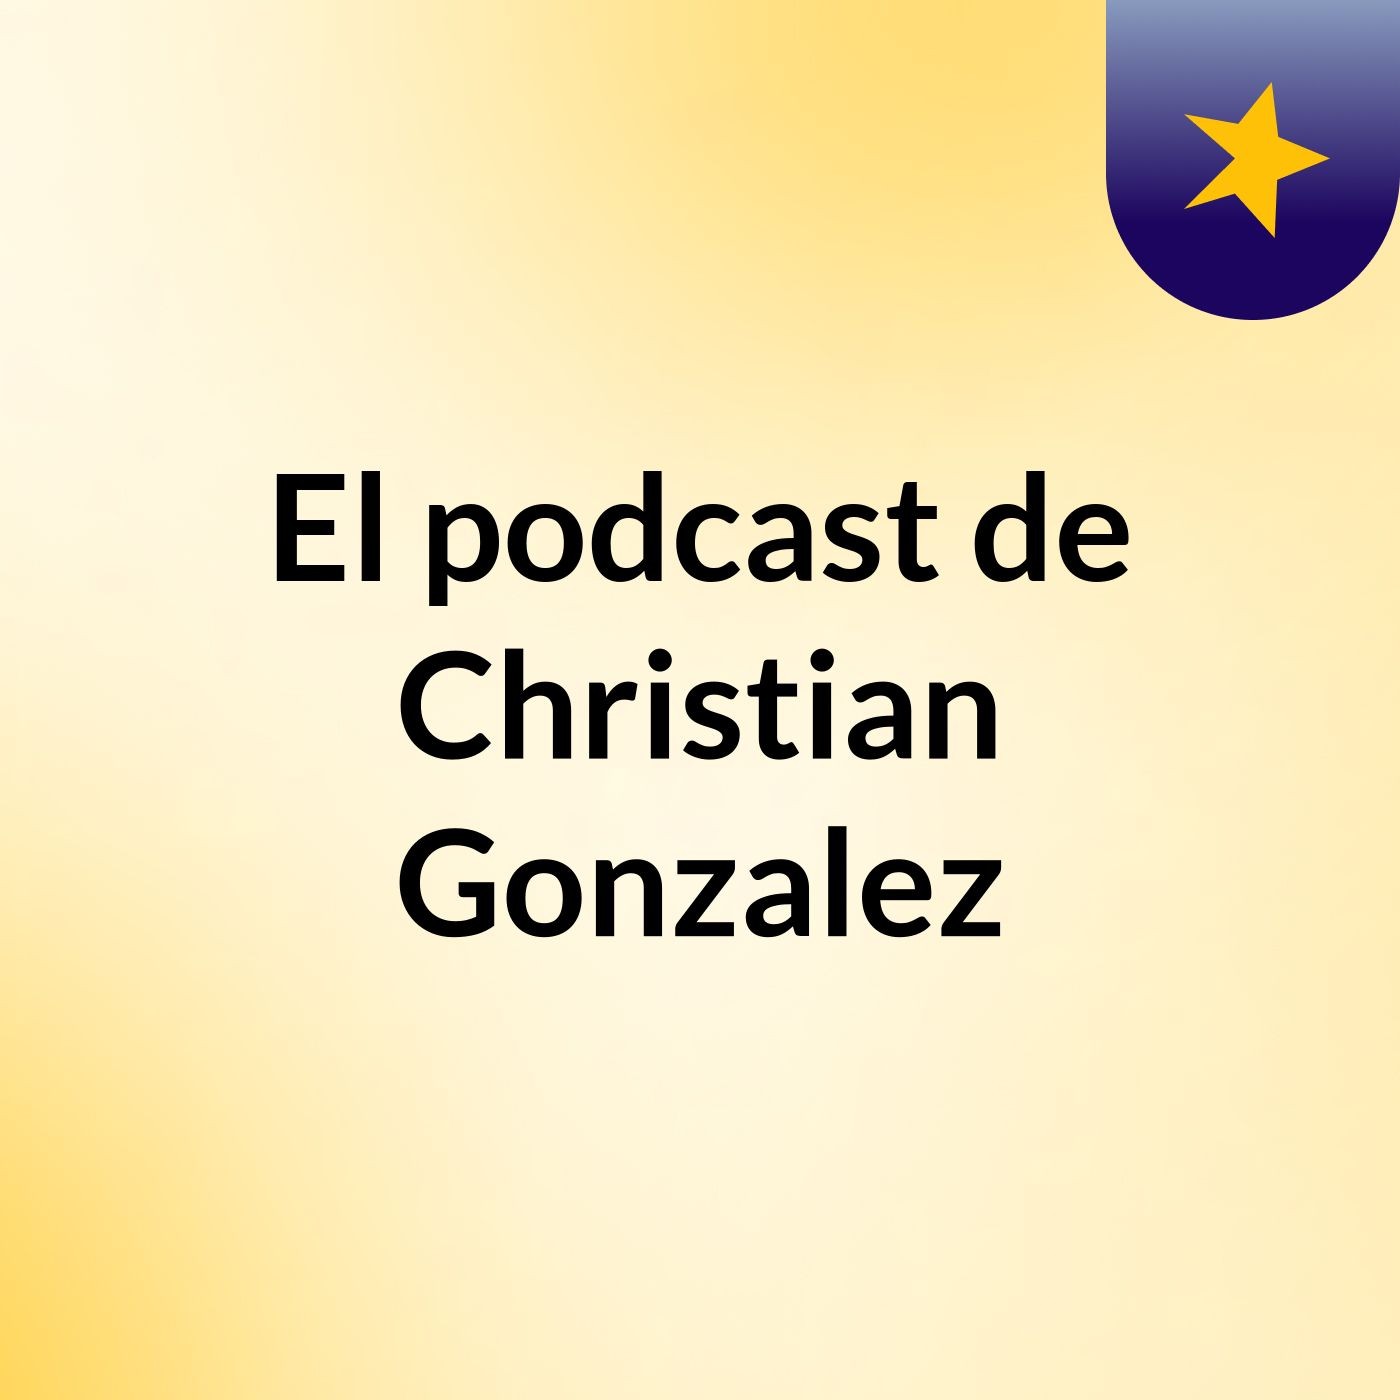 El podcast de Christian Gonzalez